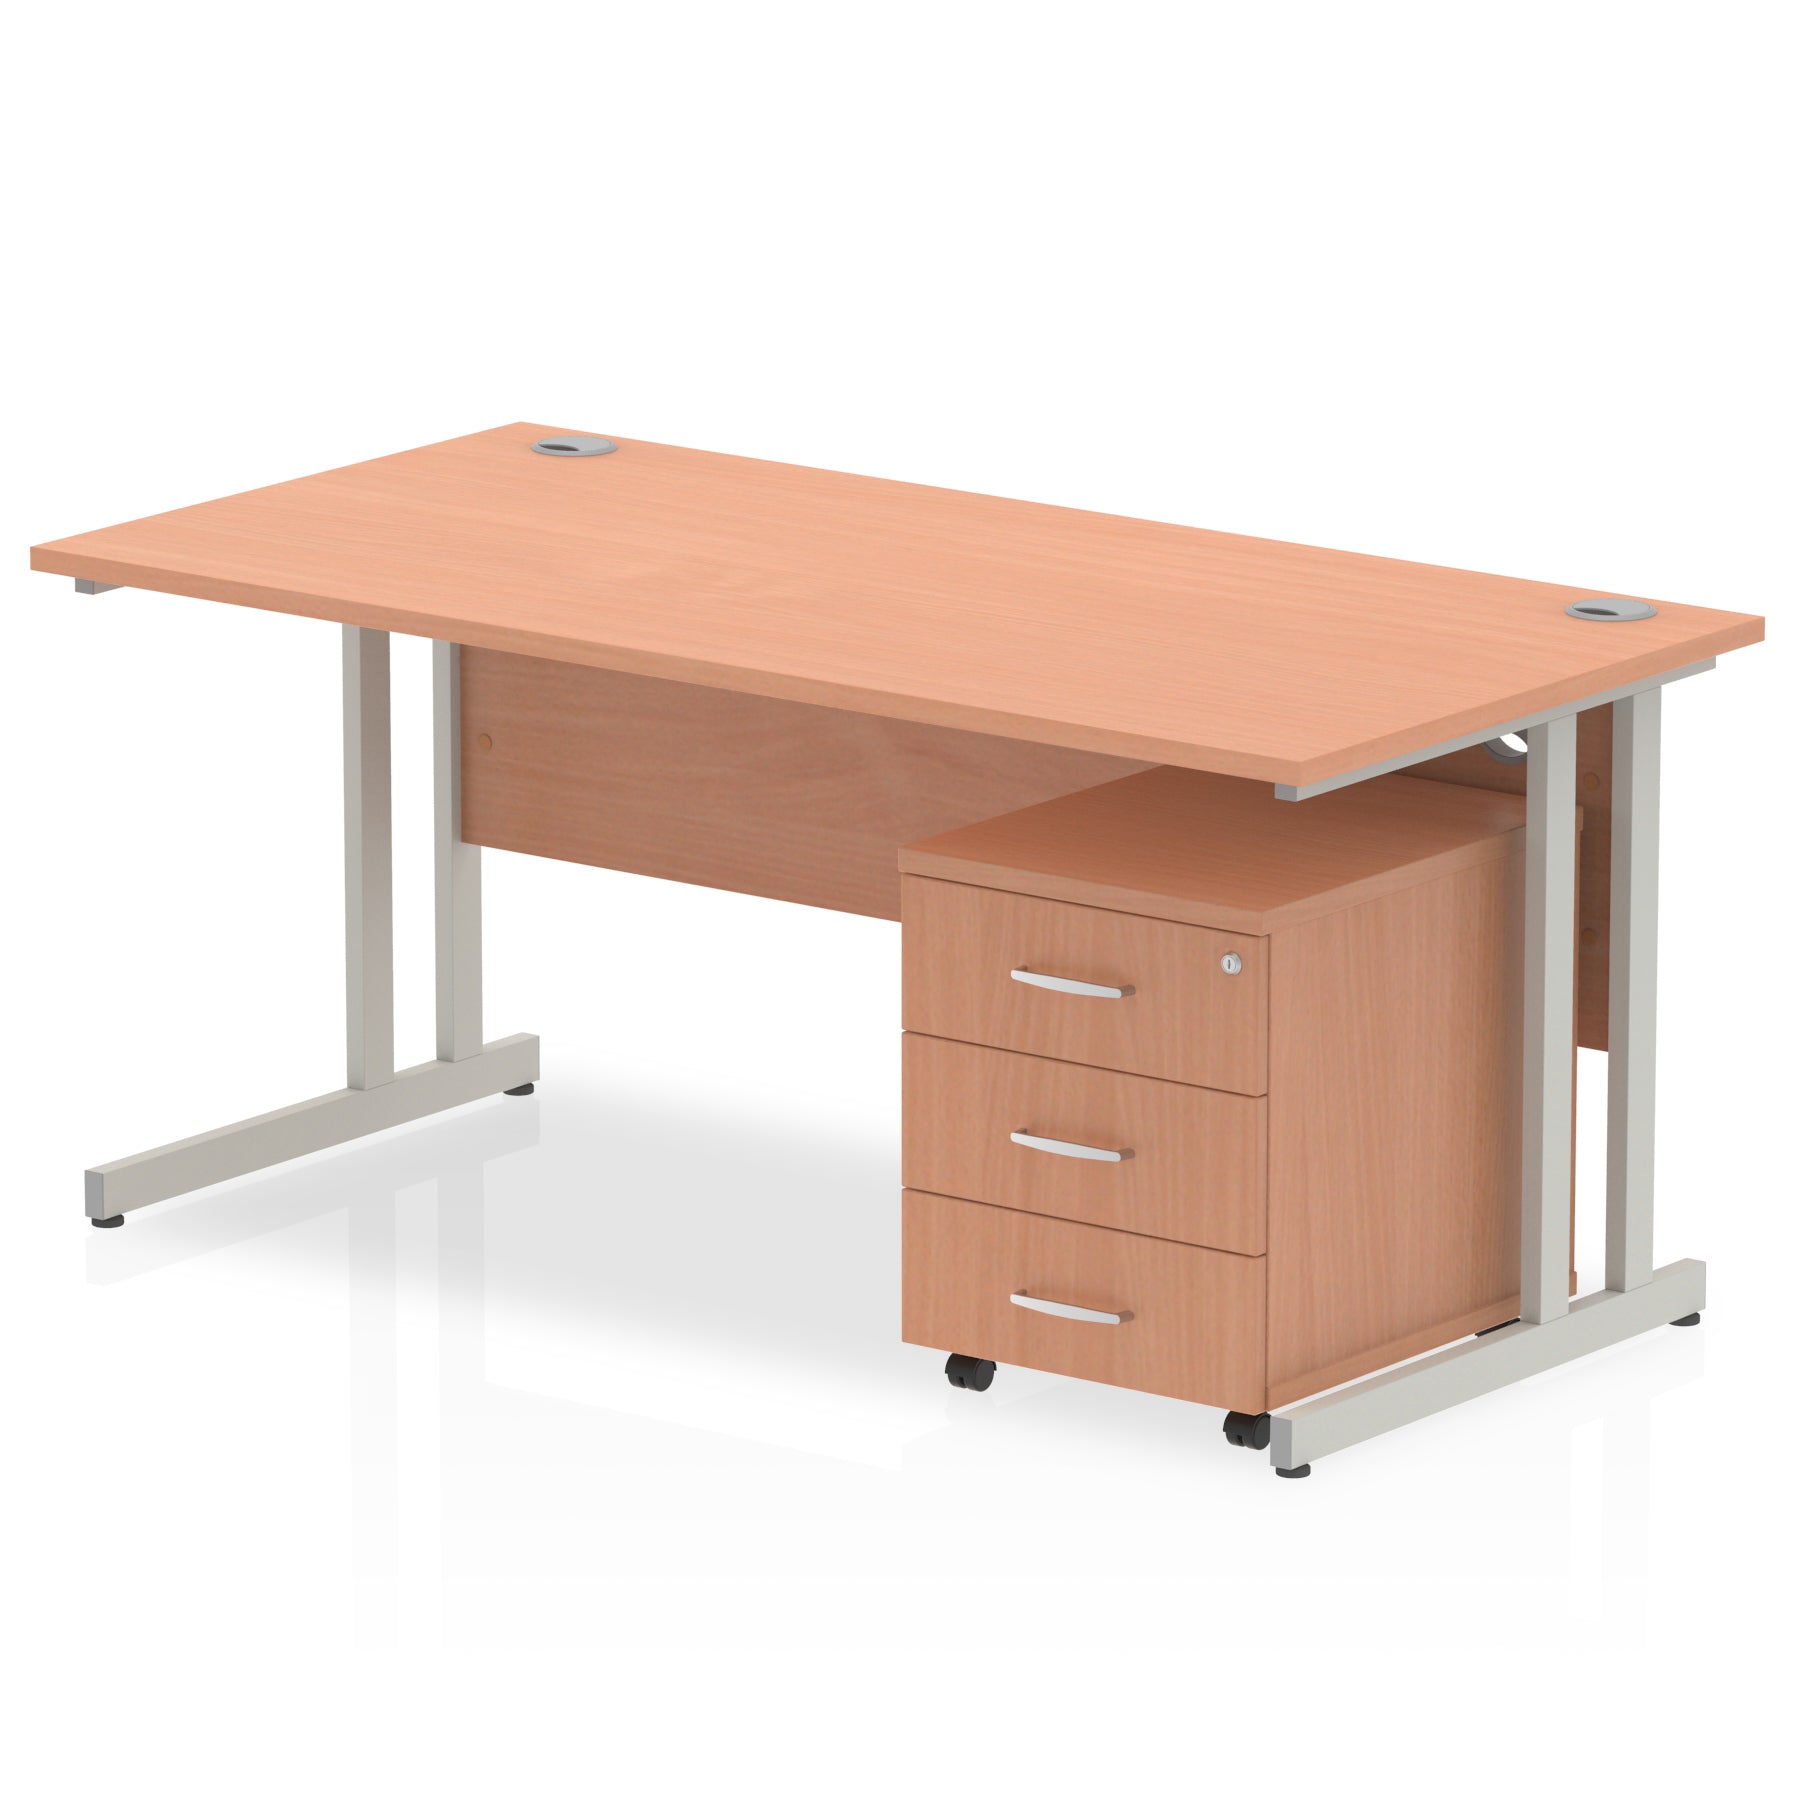 Impulse 1800mm Cantilever Straight Desk With Mobile Pedestal